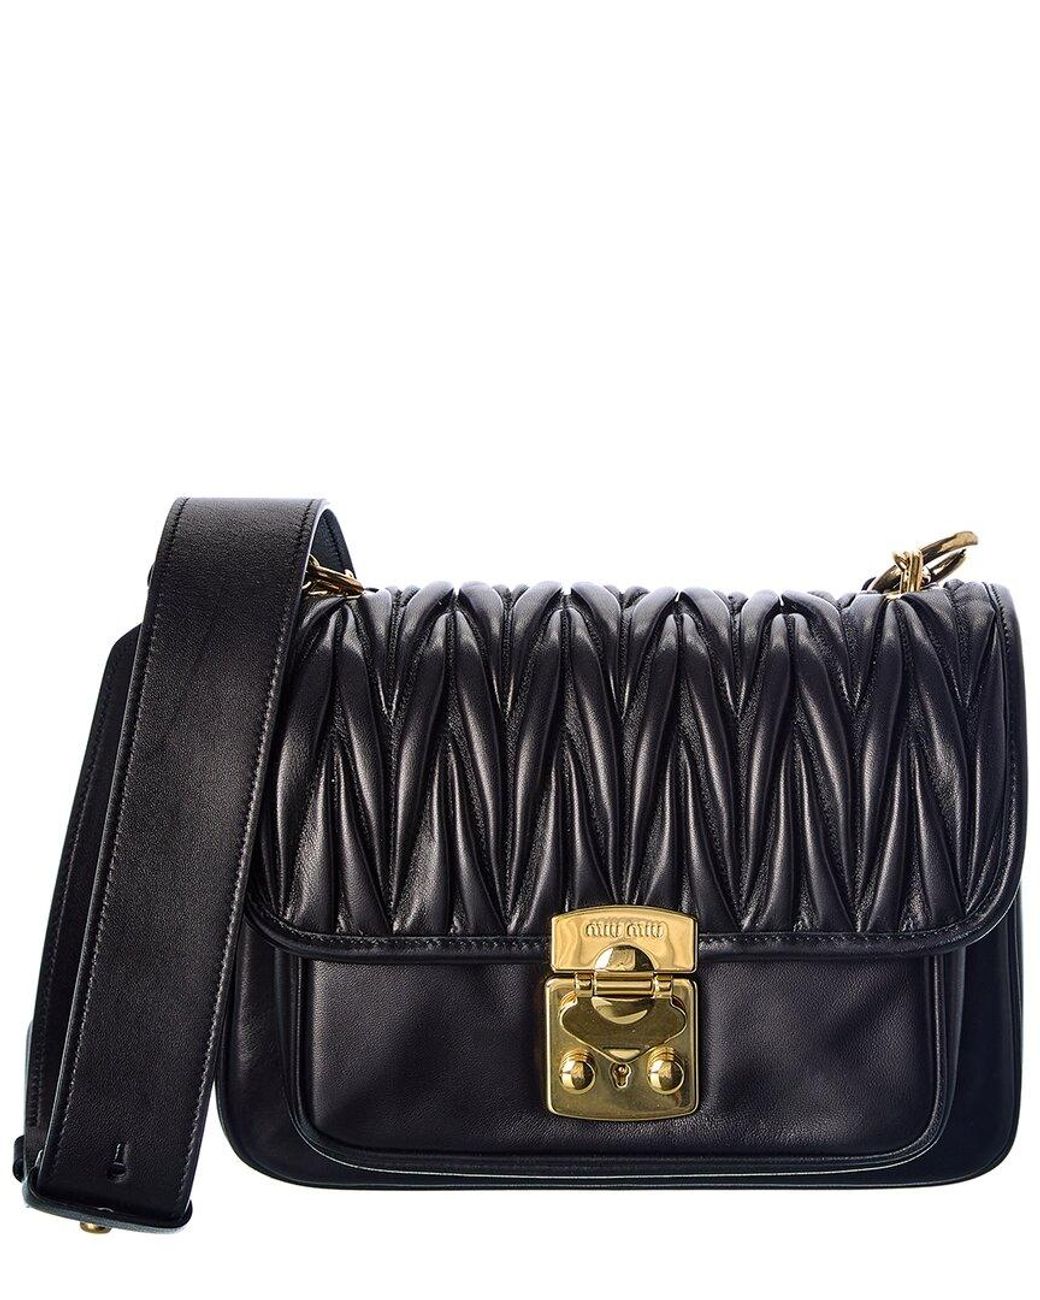 MIU MIU Shiny Leather Matelasse Shoulder Bag - Black for Women